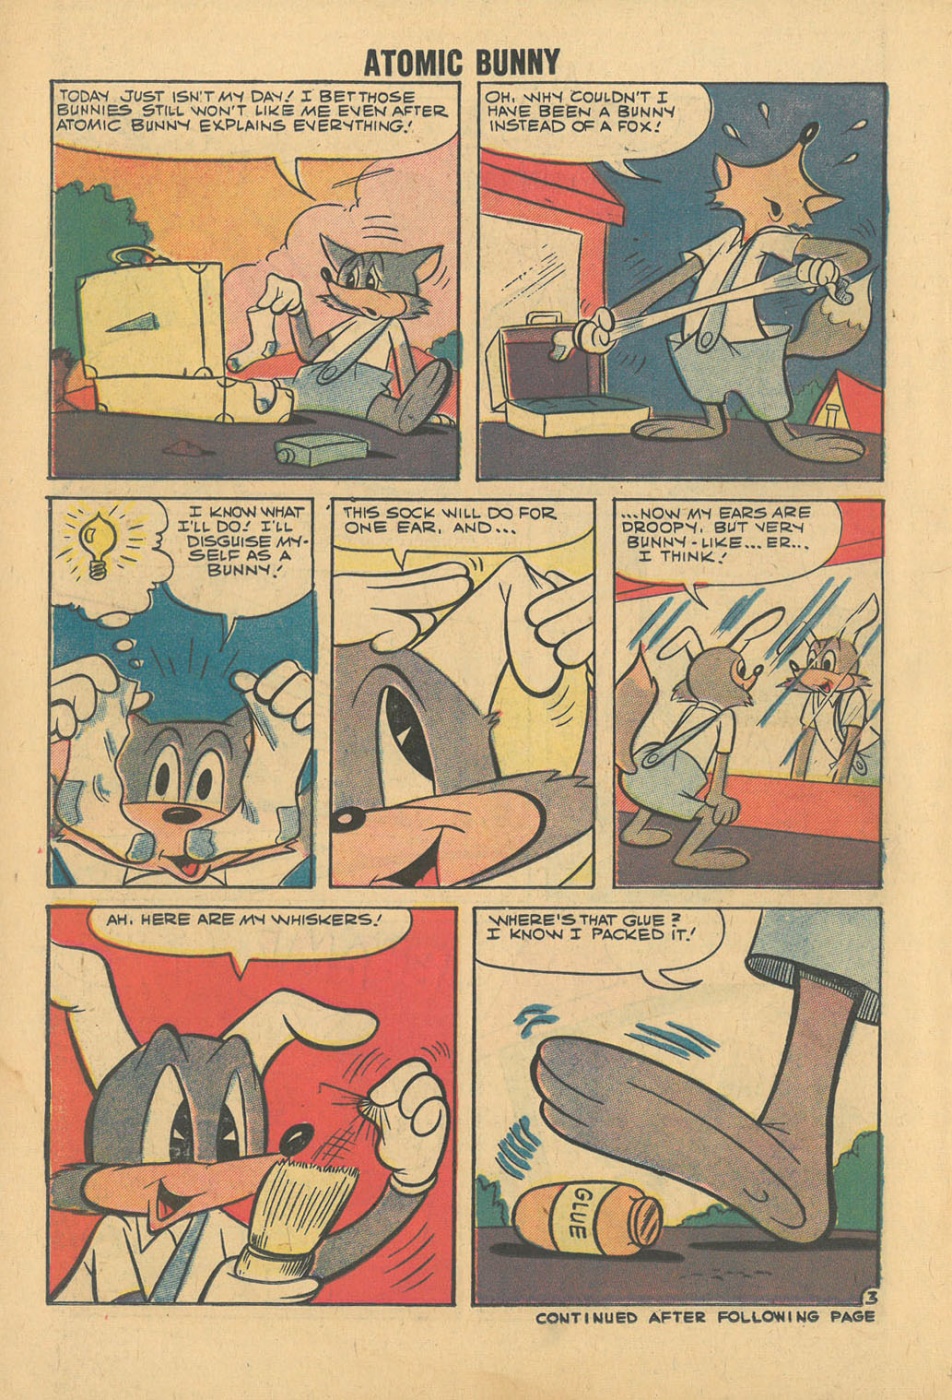 Atomic-Bunny-Comic-Strips (c) (14)